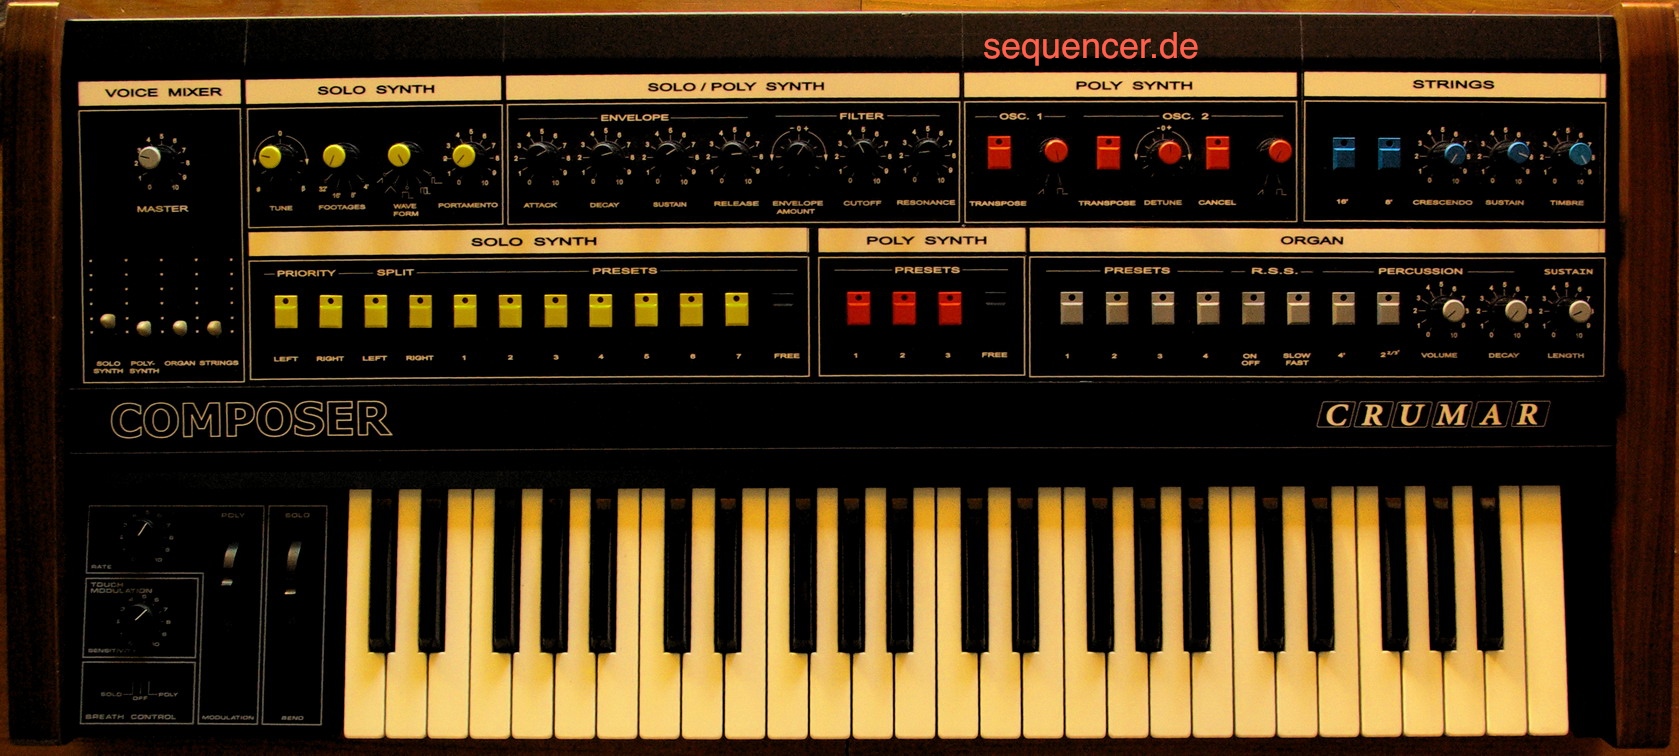 Crumar Composer synthesizer